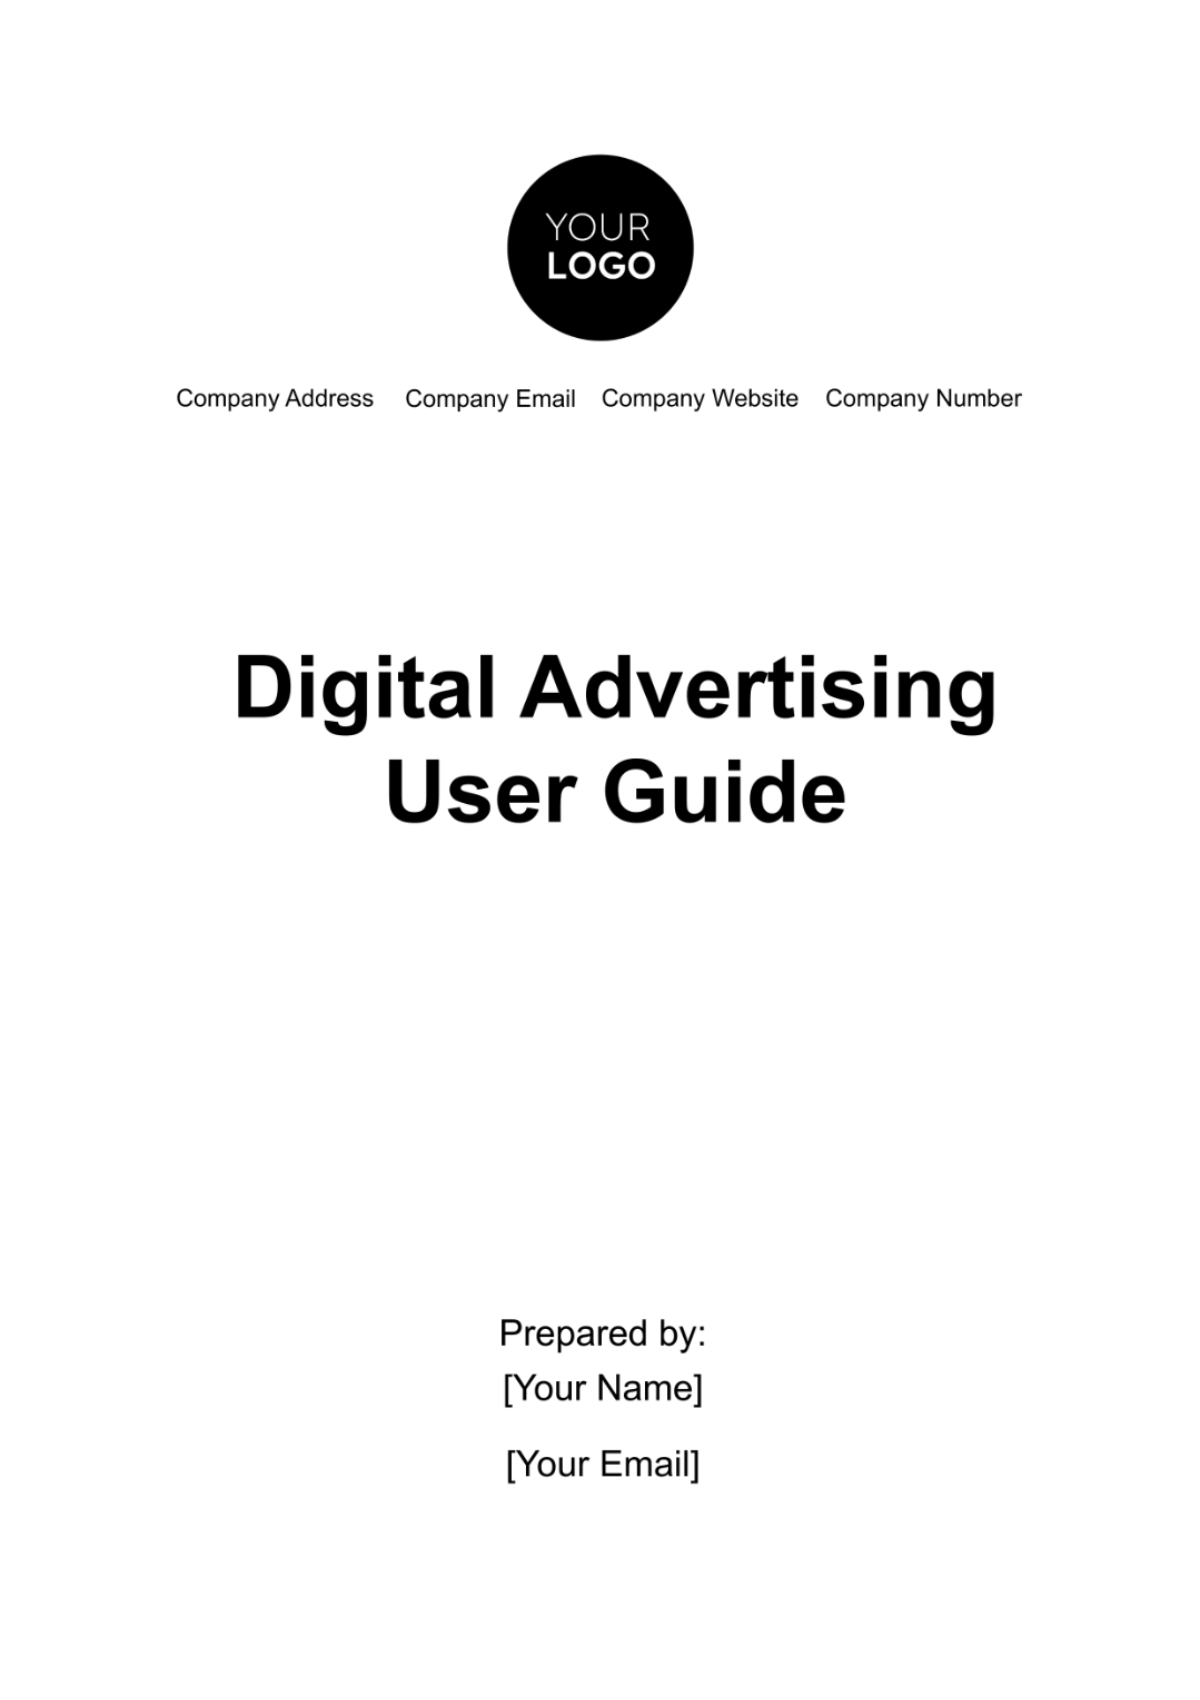 Digital Advertising User Guide Template